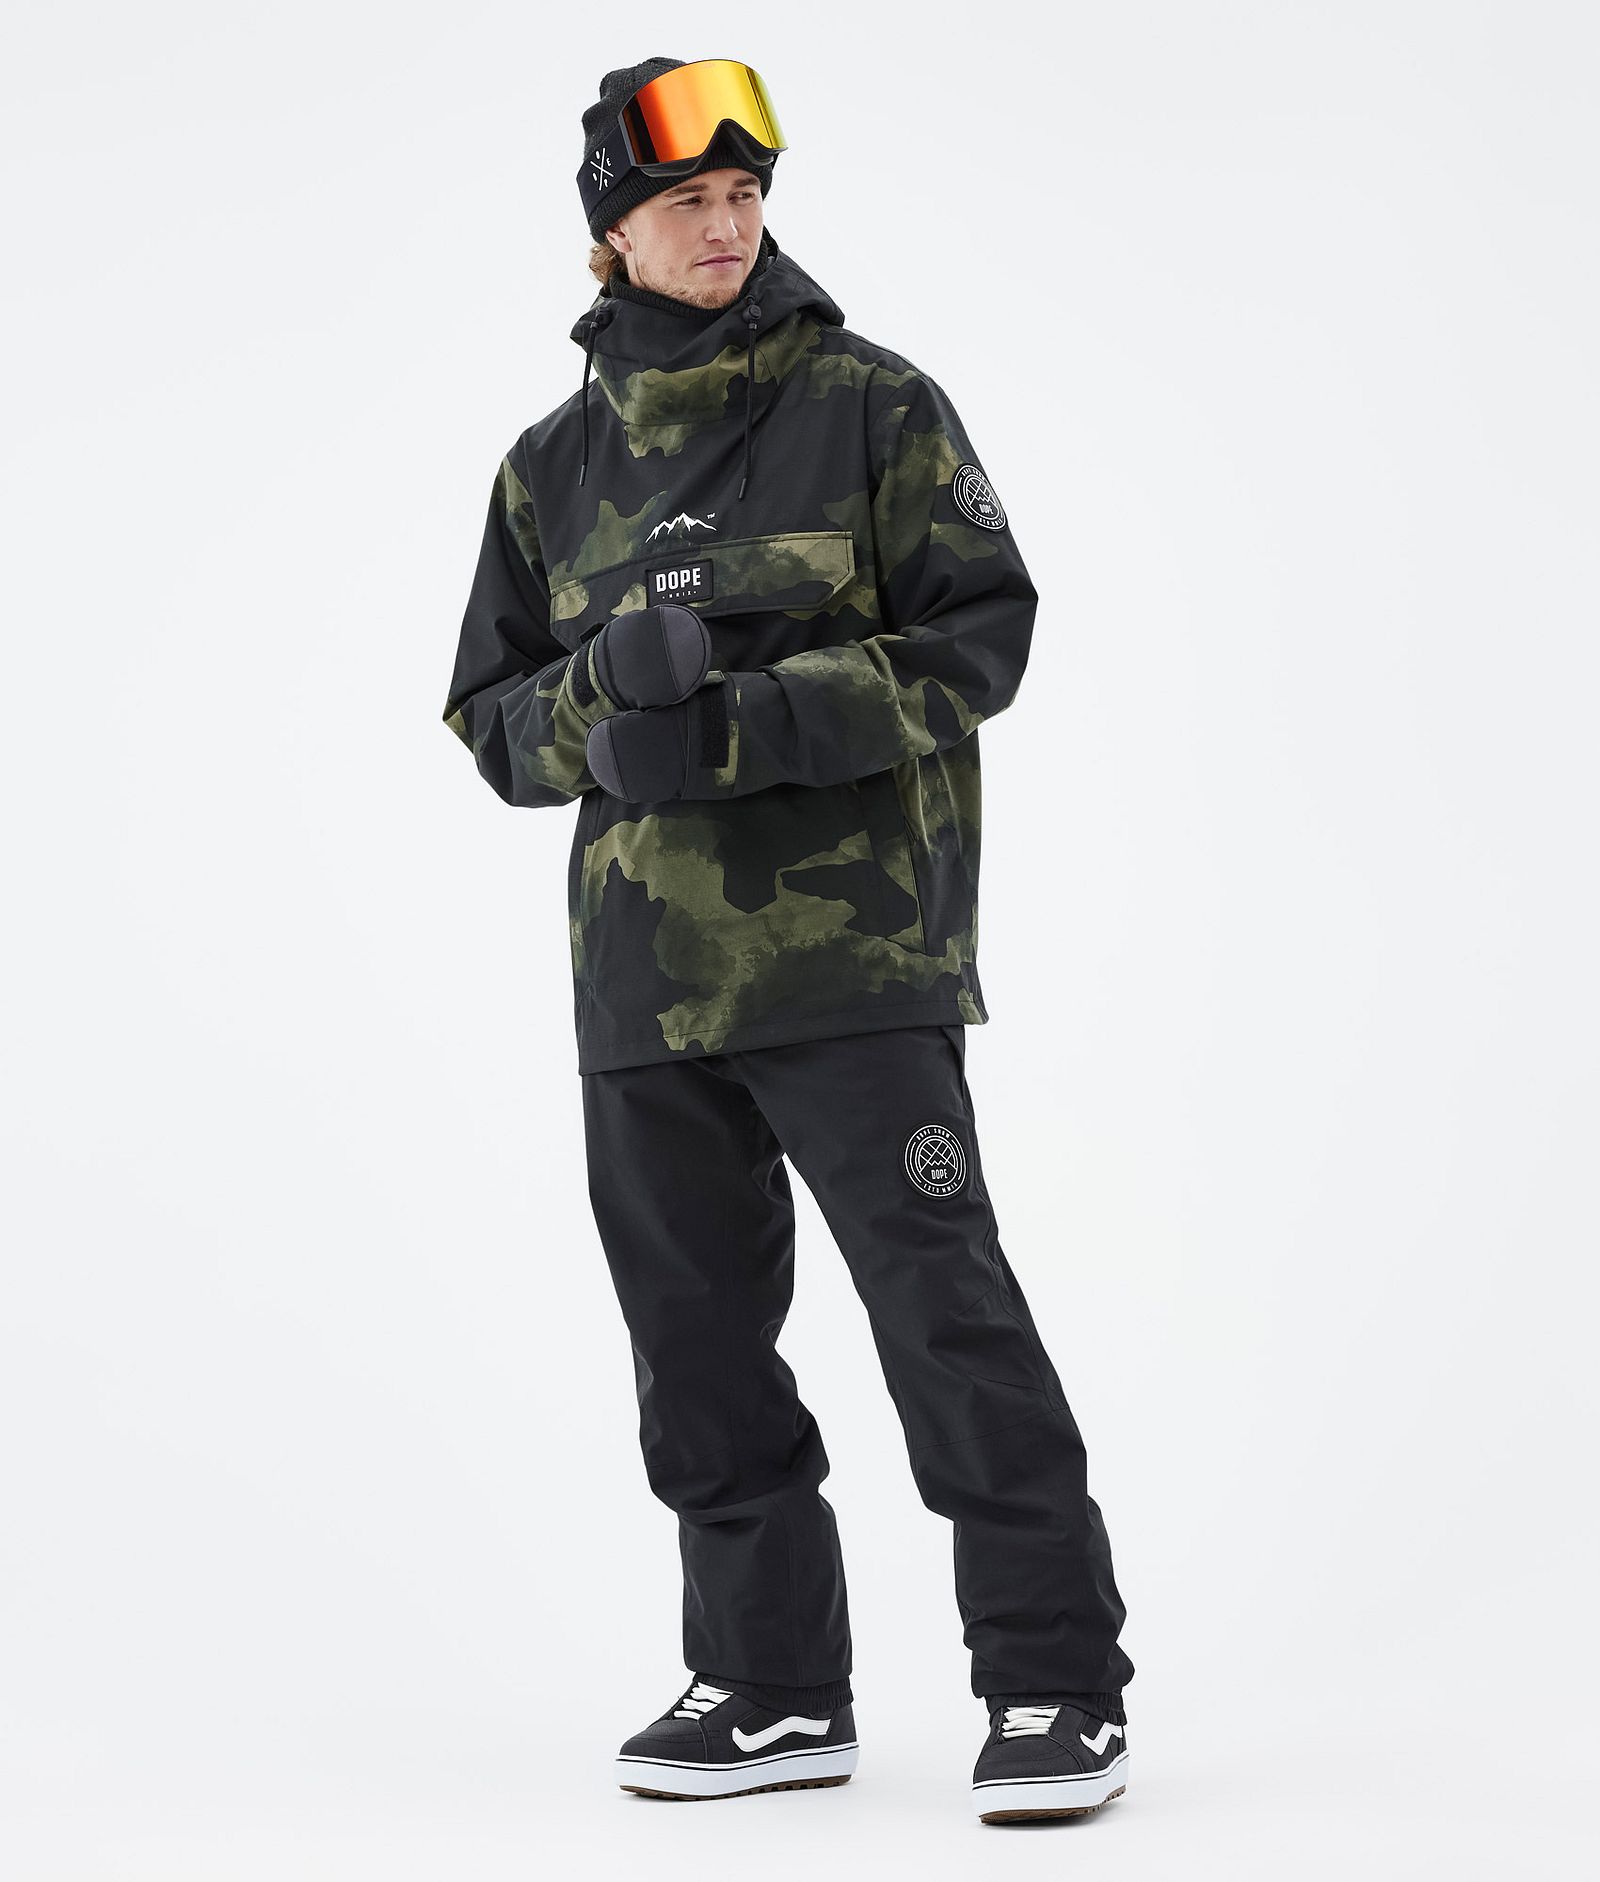 Dope Blizzard 2022 Snowboard Jacket Men Green Camo